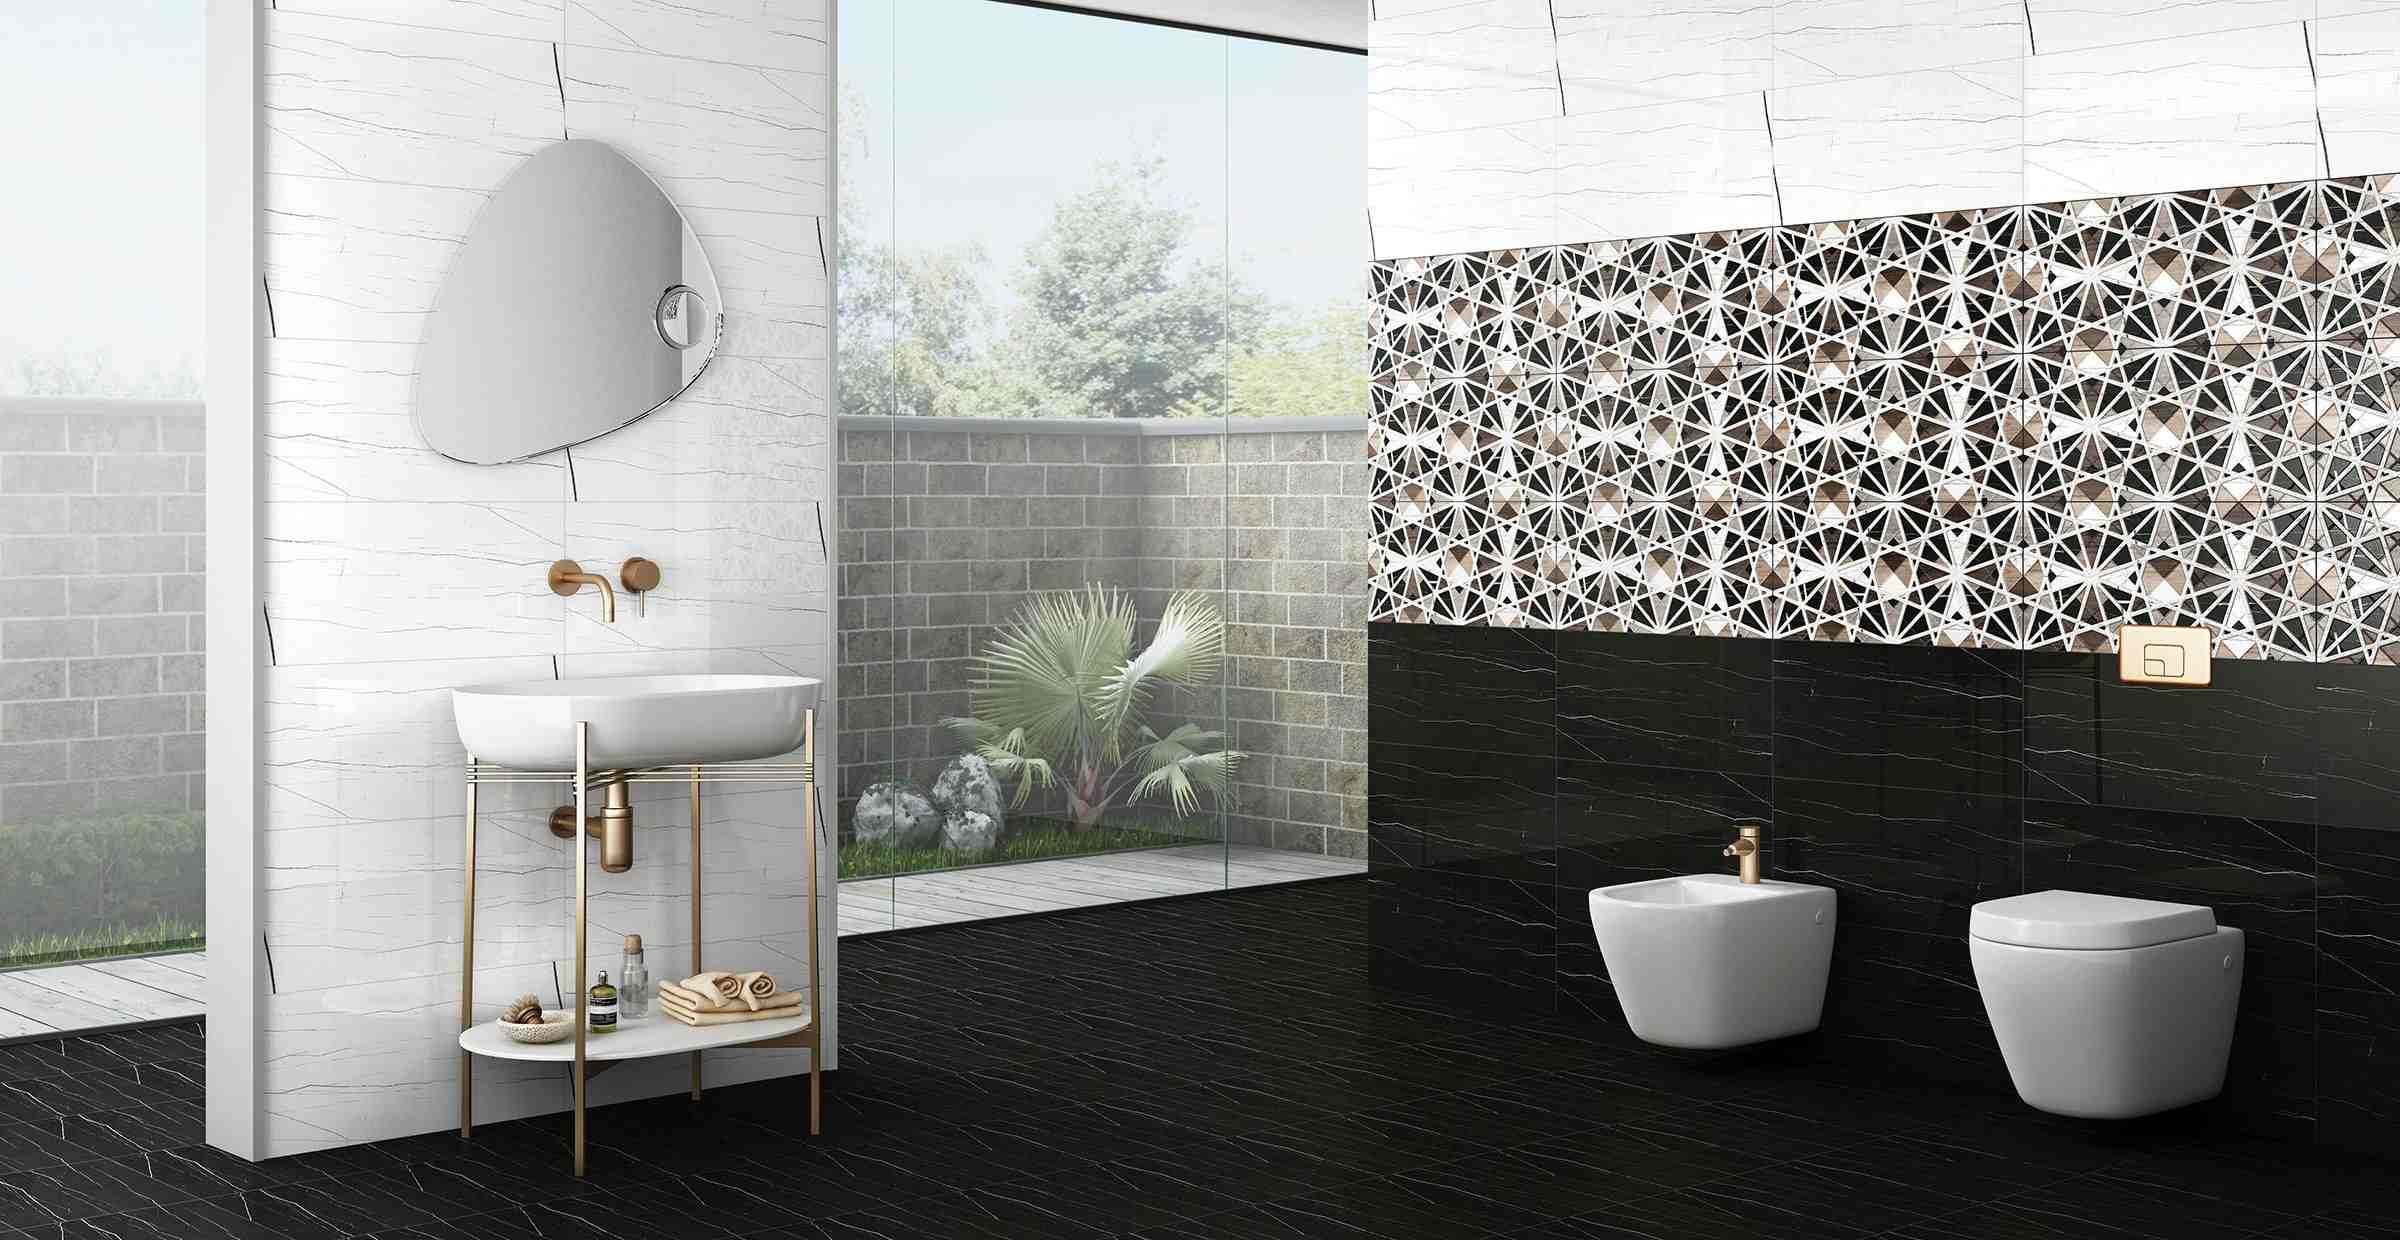 black floor tiles in a bathroom with mirror, toilet, washbasin